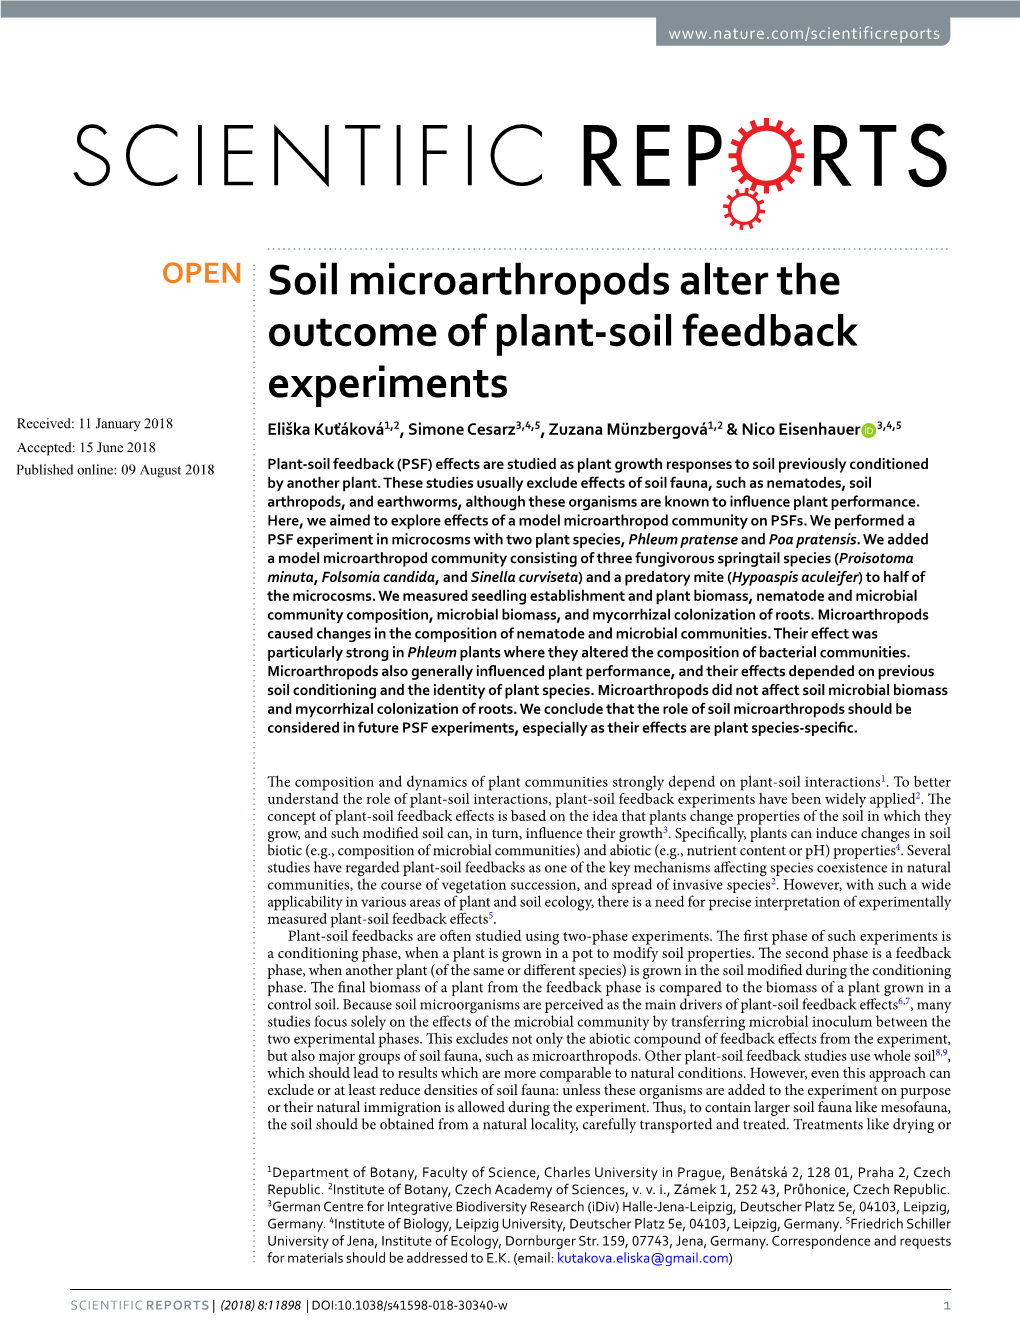 Soil Microarthropods Alter the Outcome of Plant-Soil Feedback